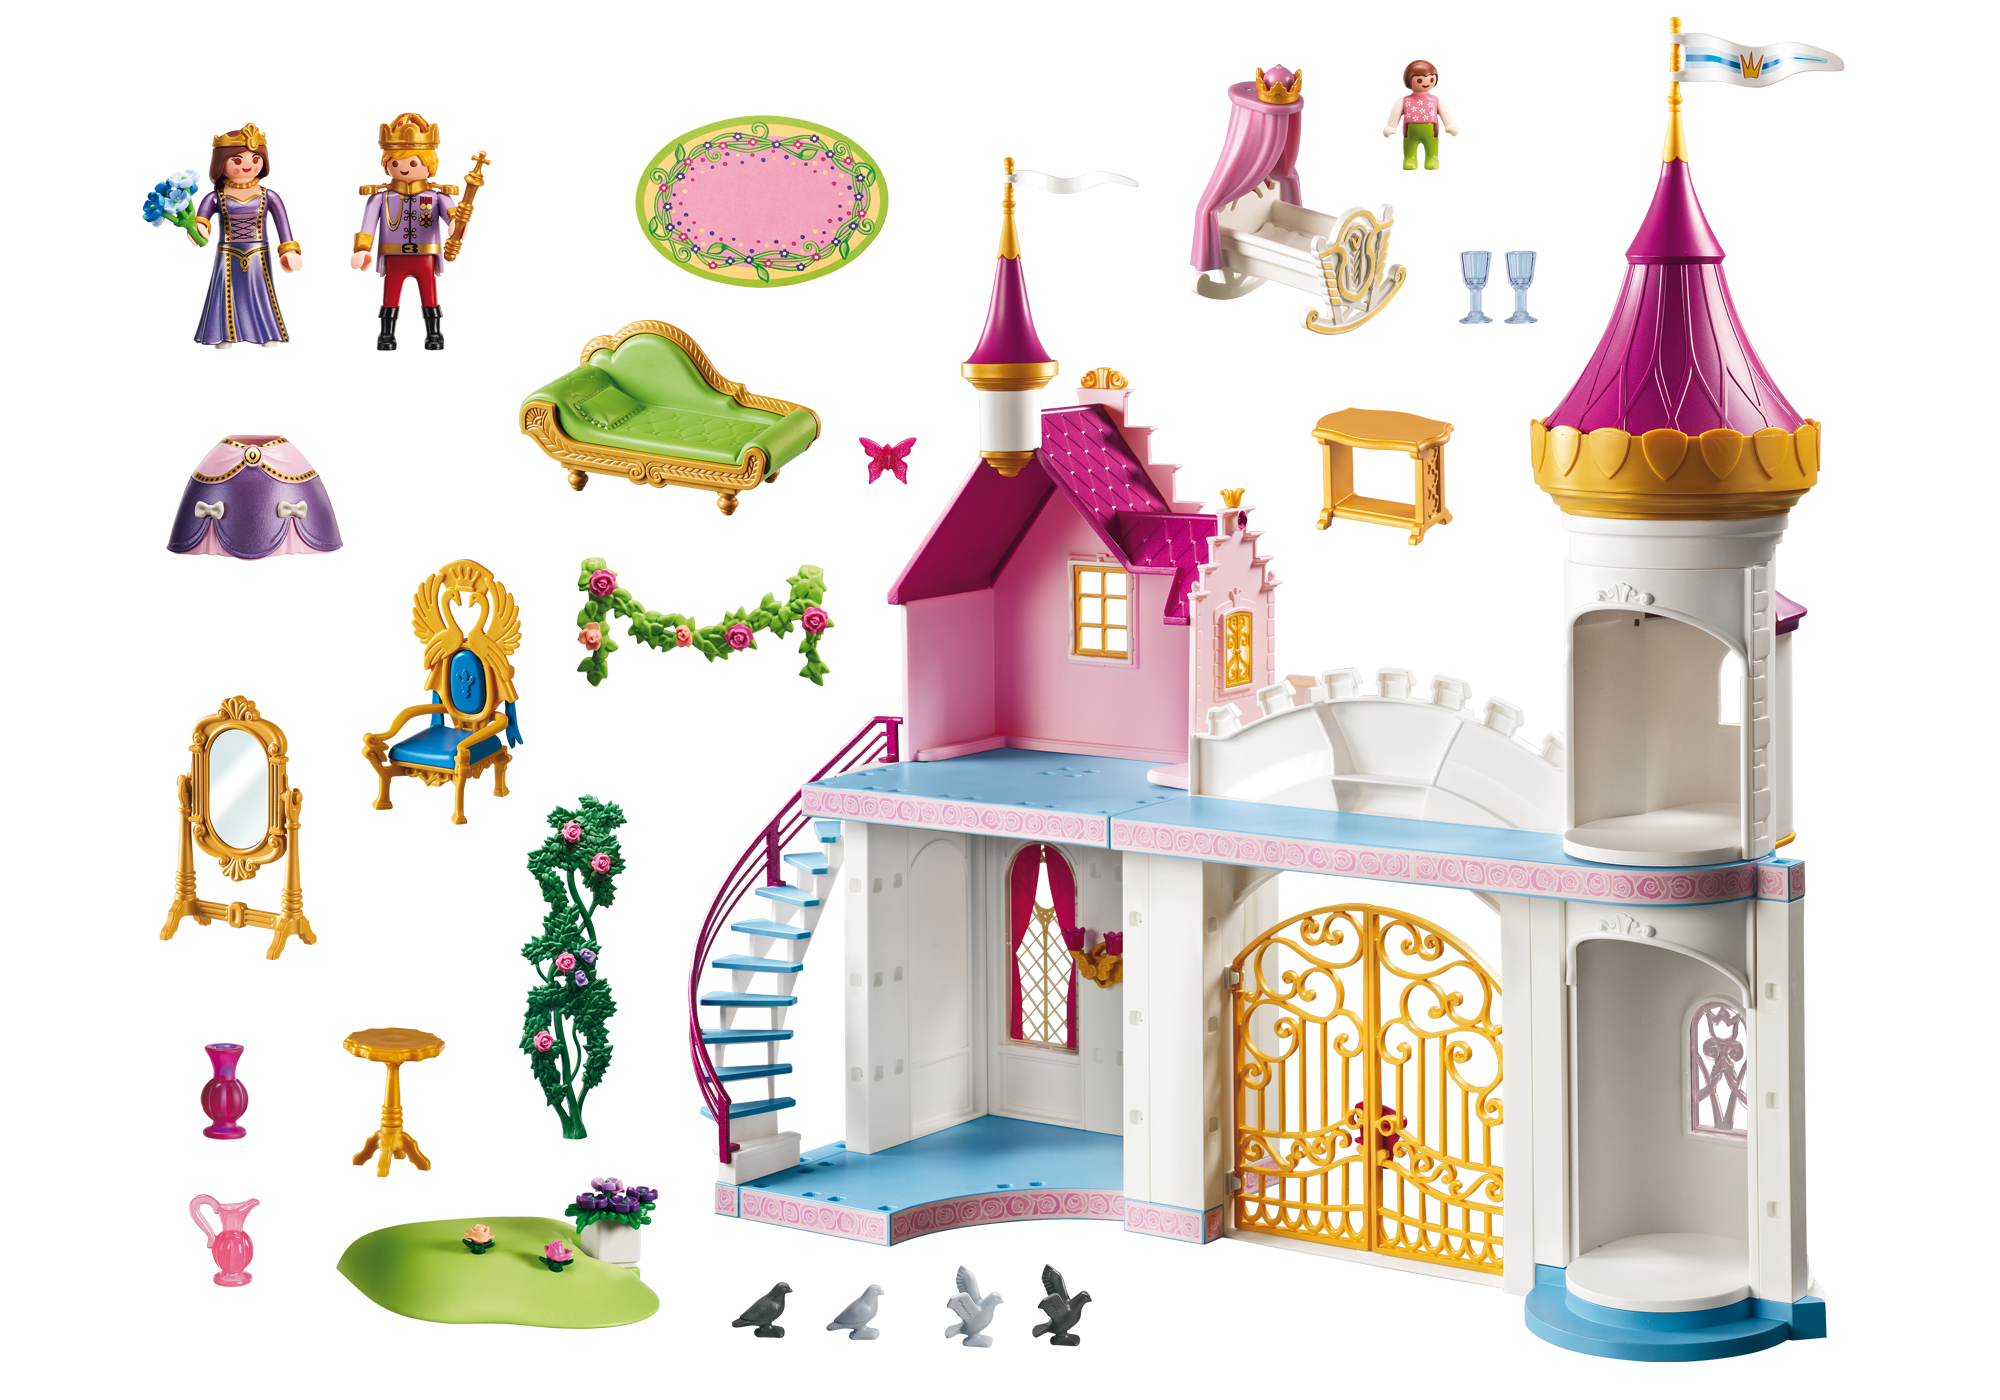 playmobil chateau princesse 6848